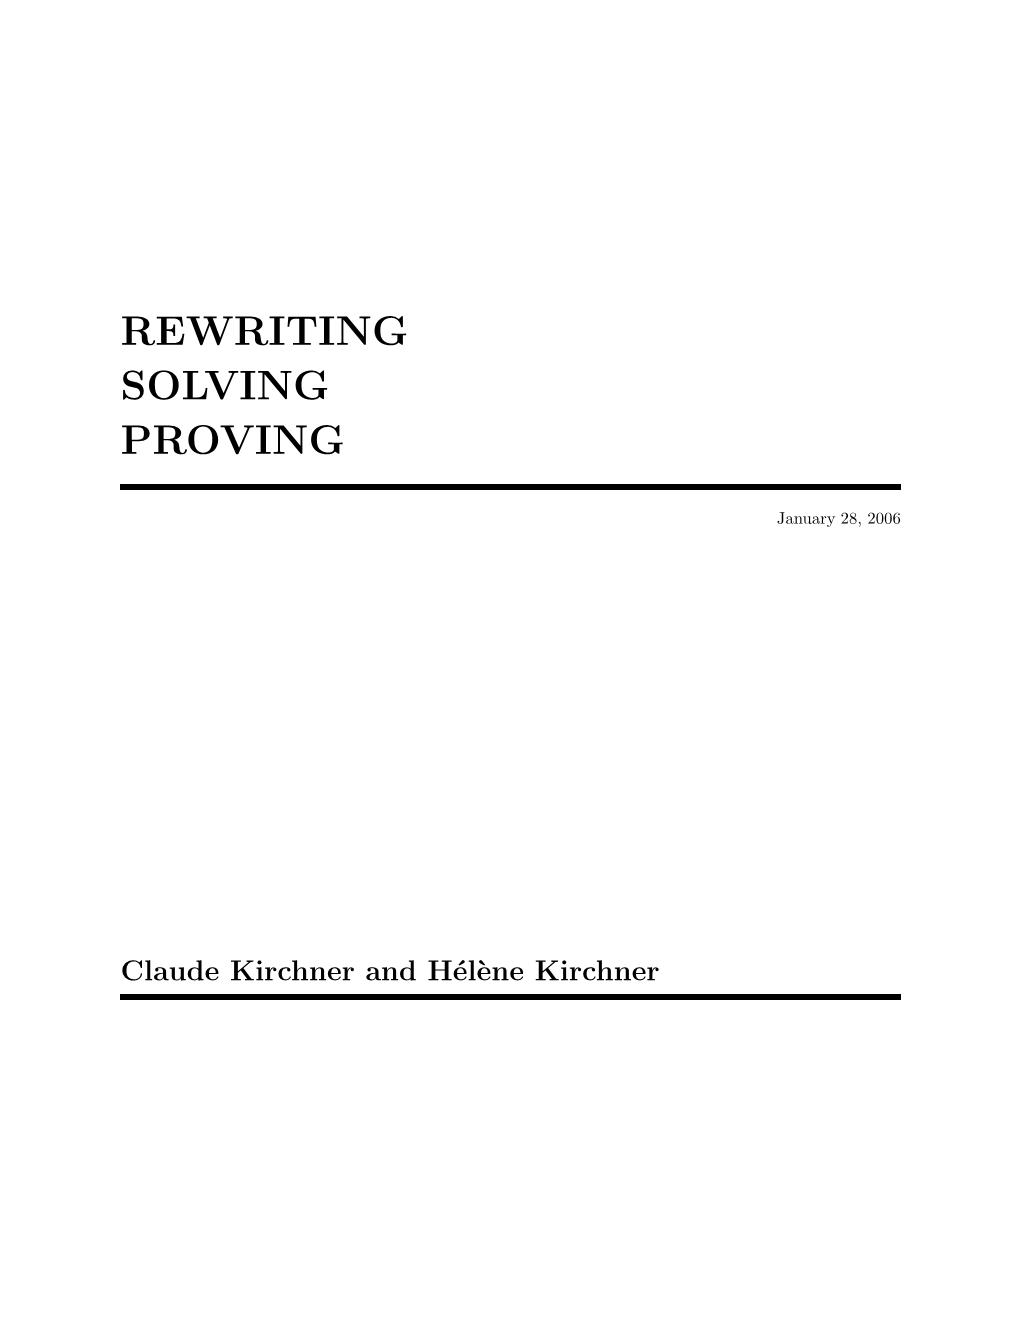 Rewriting Solving Proving